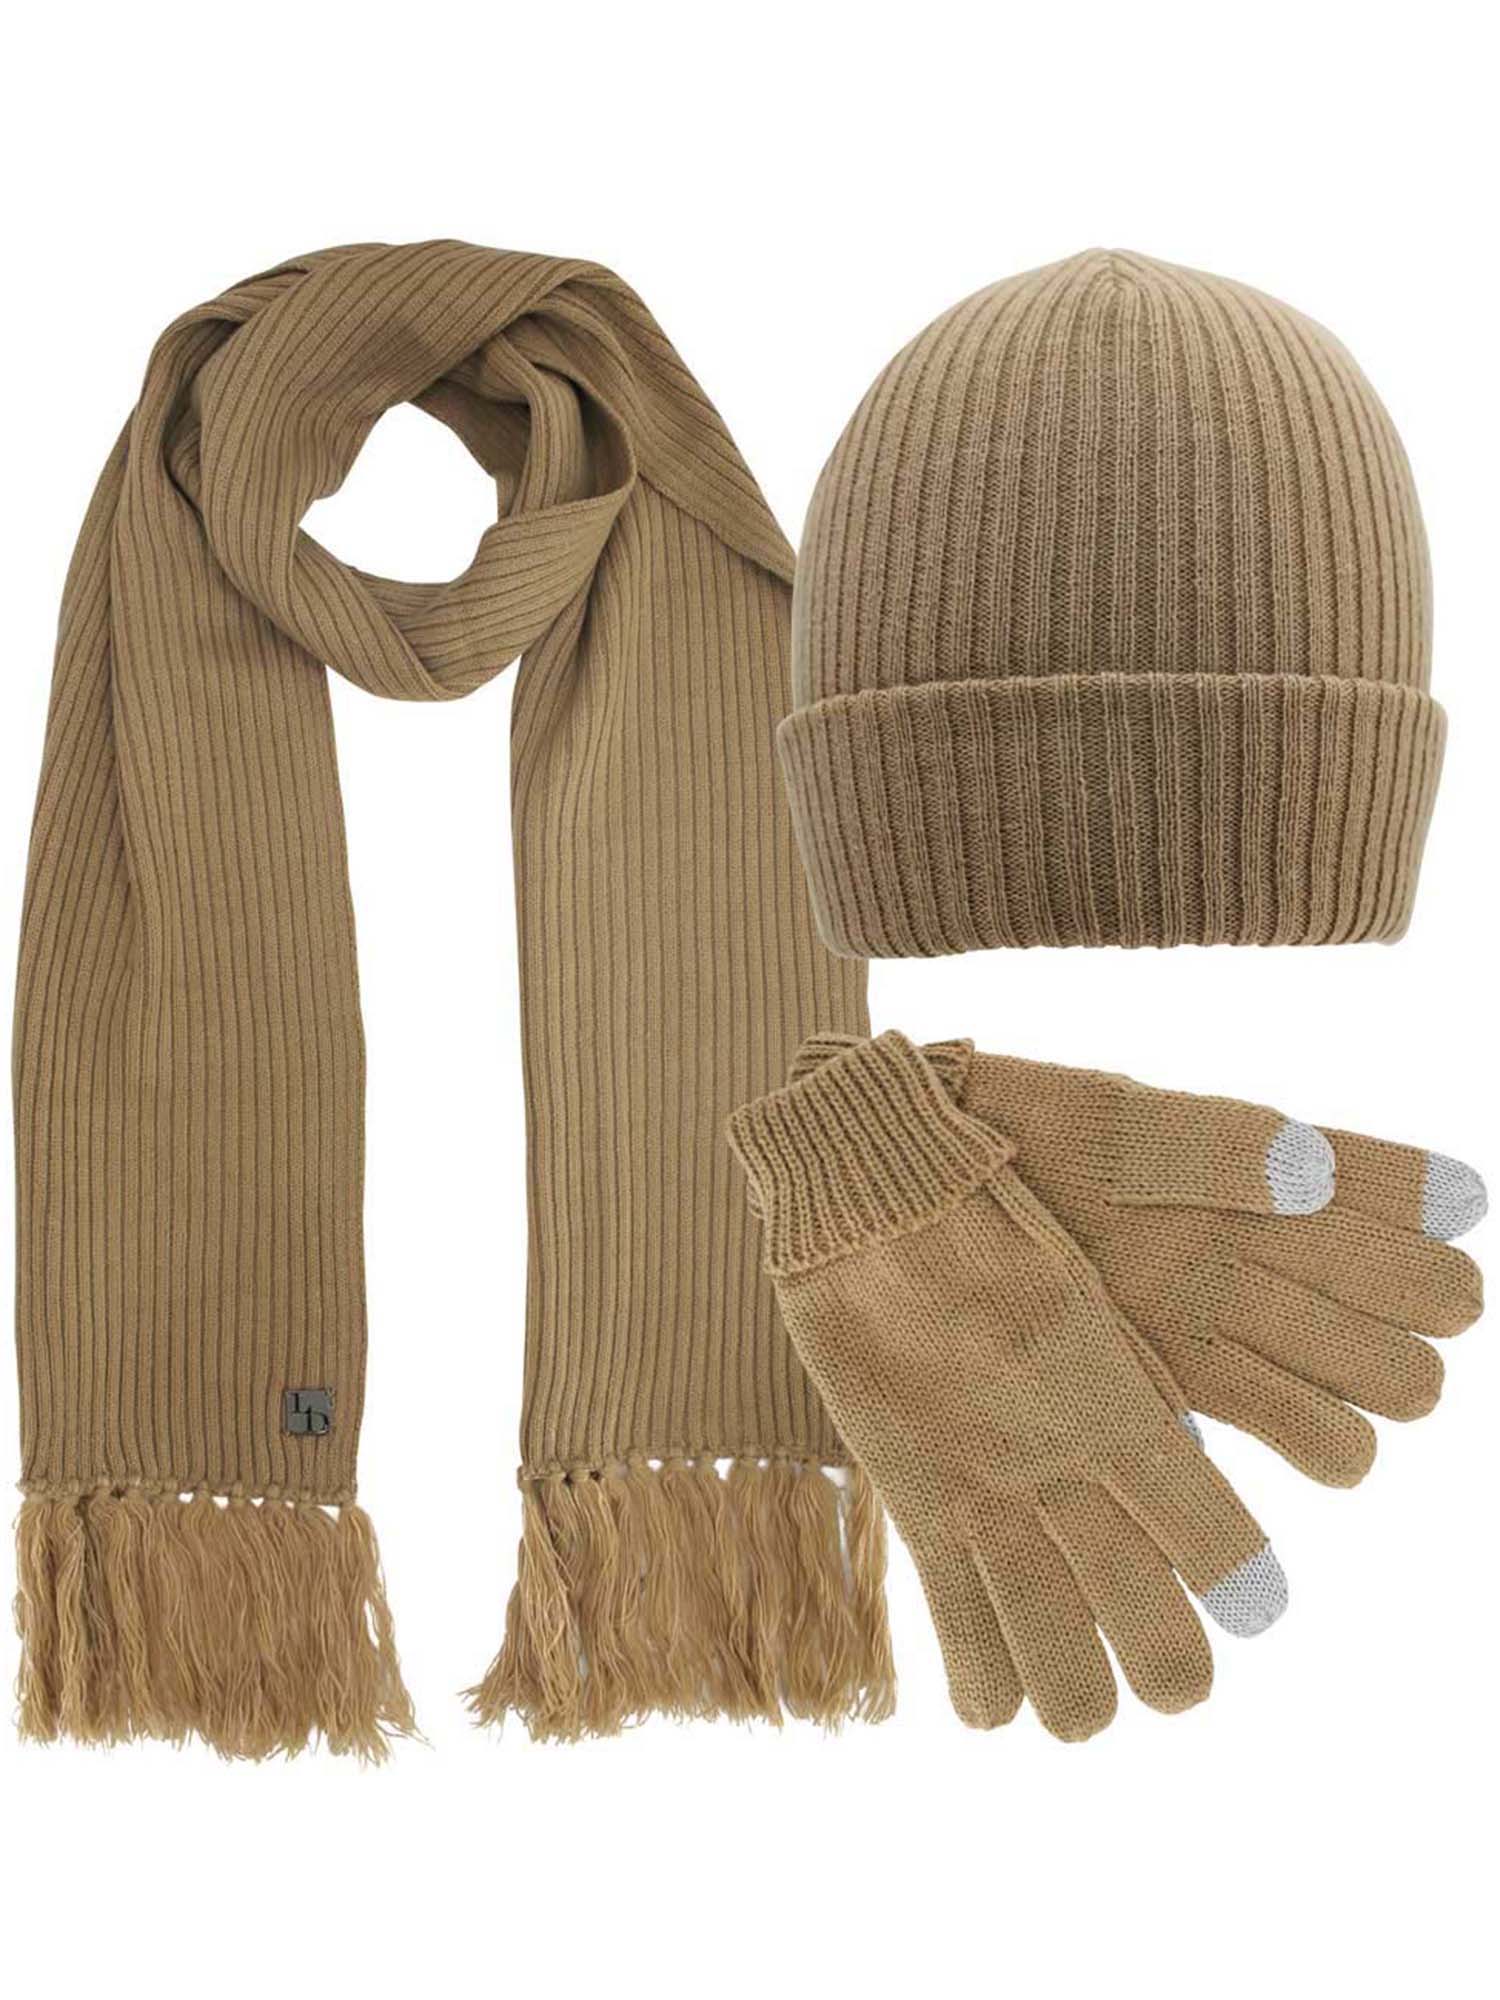 Pin on Hats belts scarves & gloves